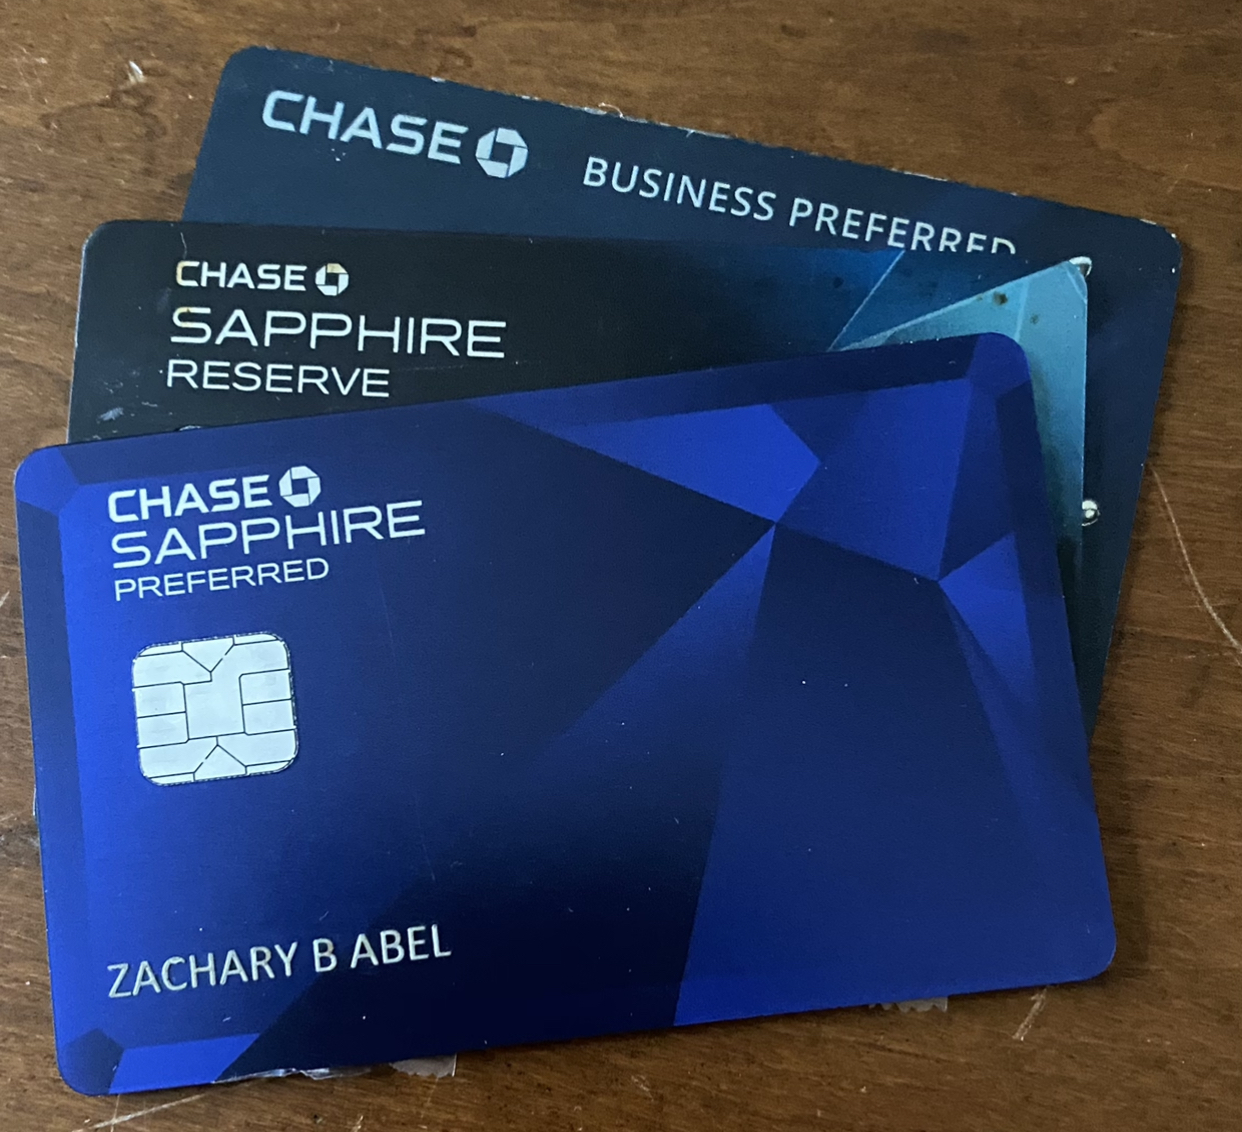 Ultimate Rewards, Credit Cards